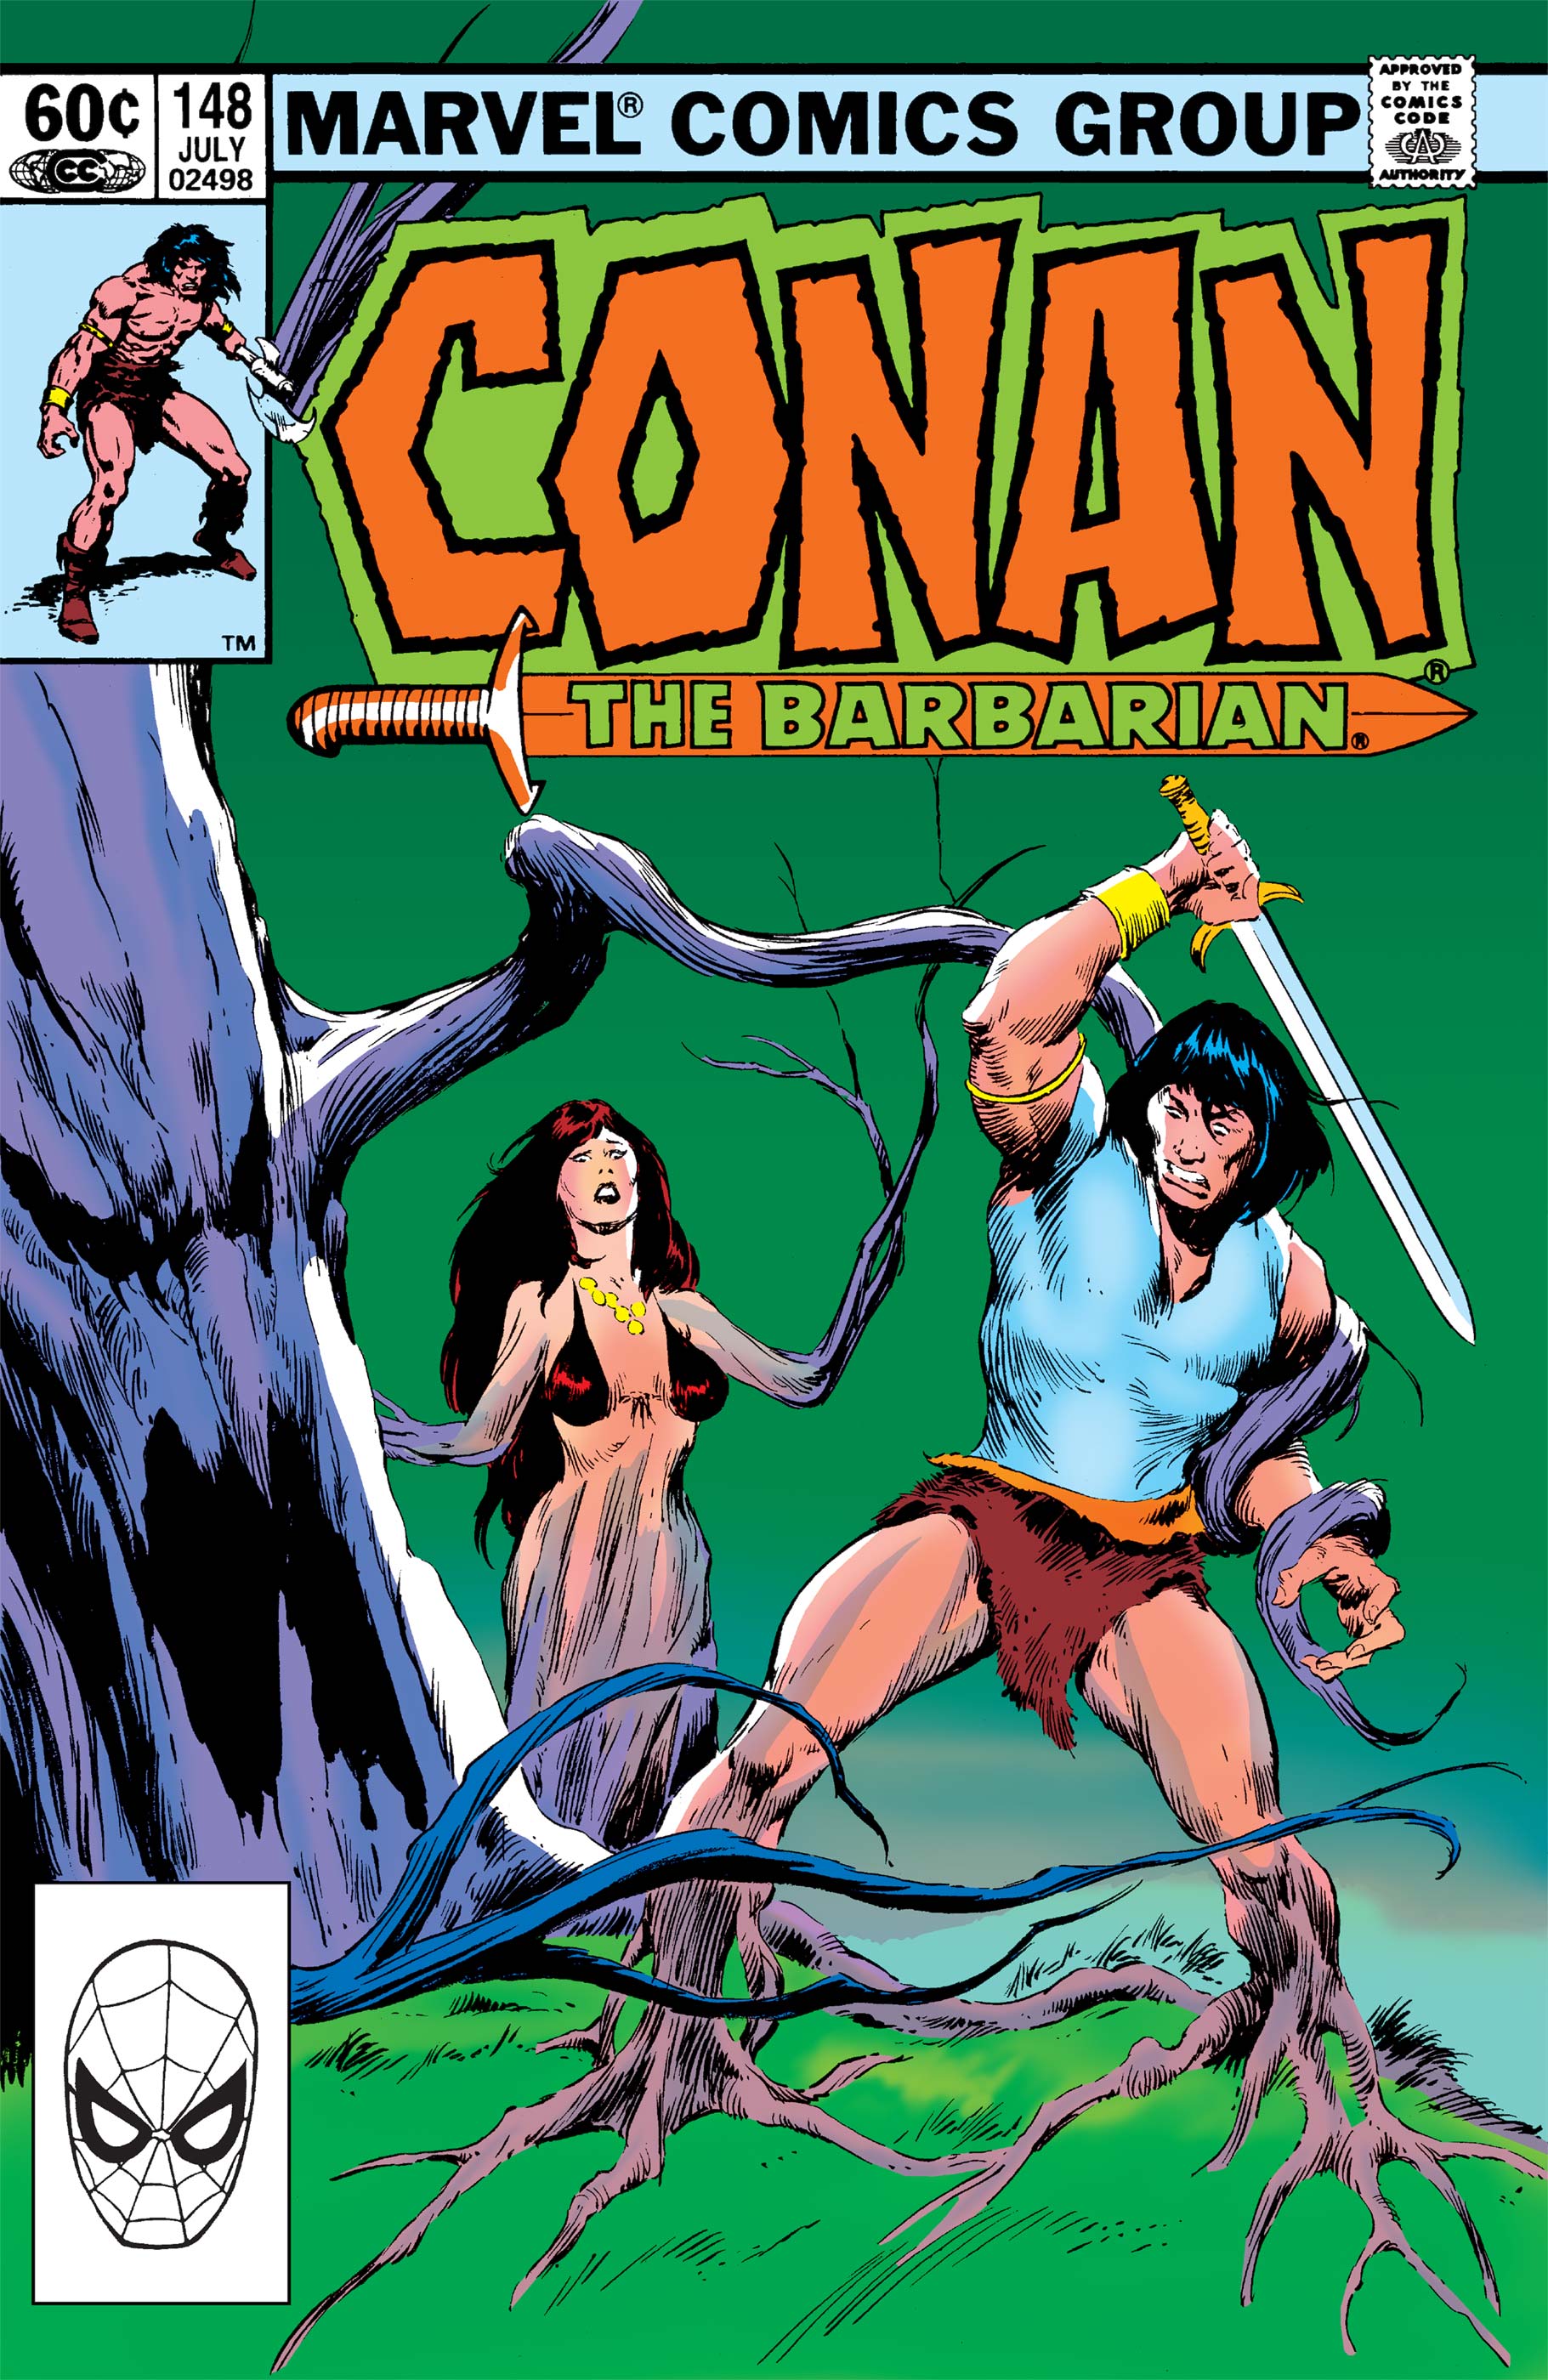 Conan the Barbarian (1970) #148